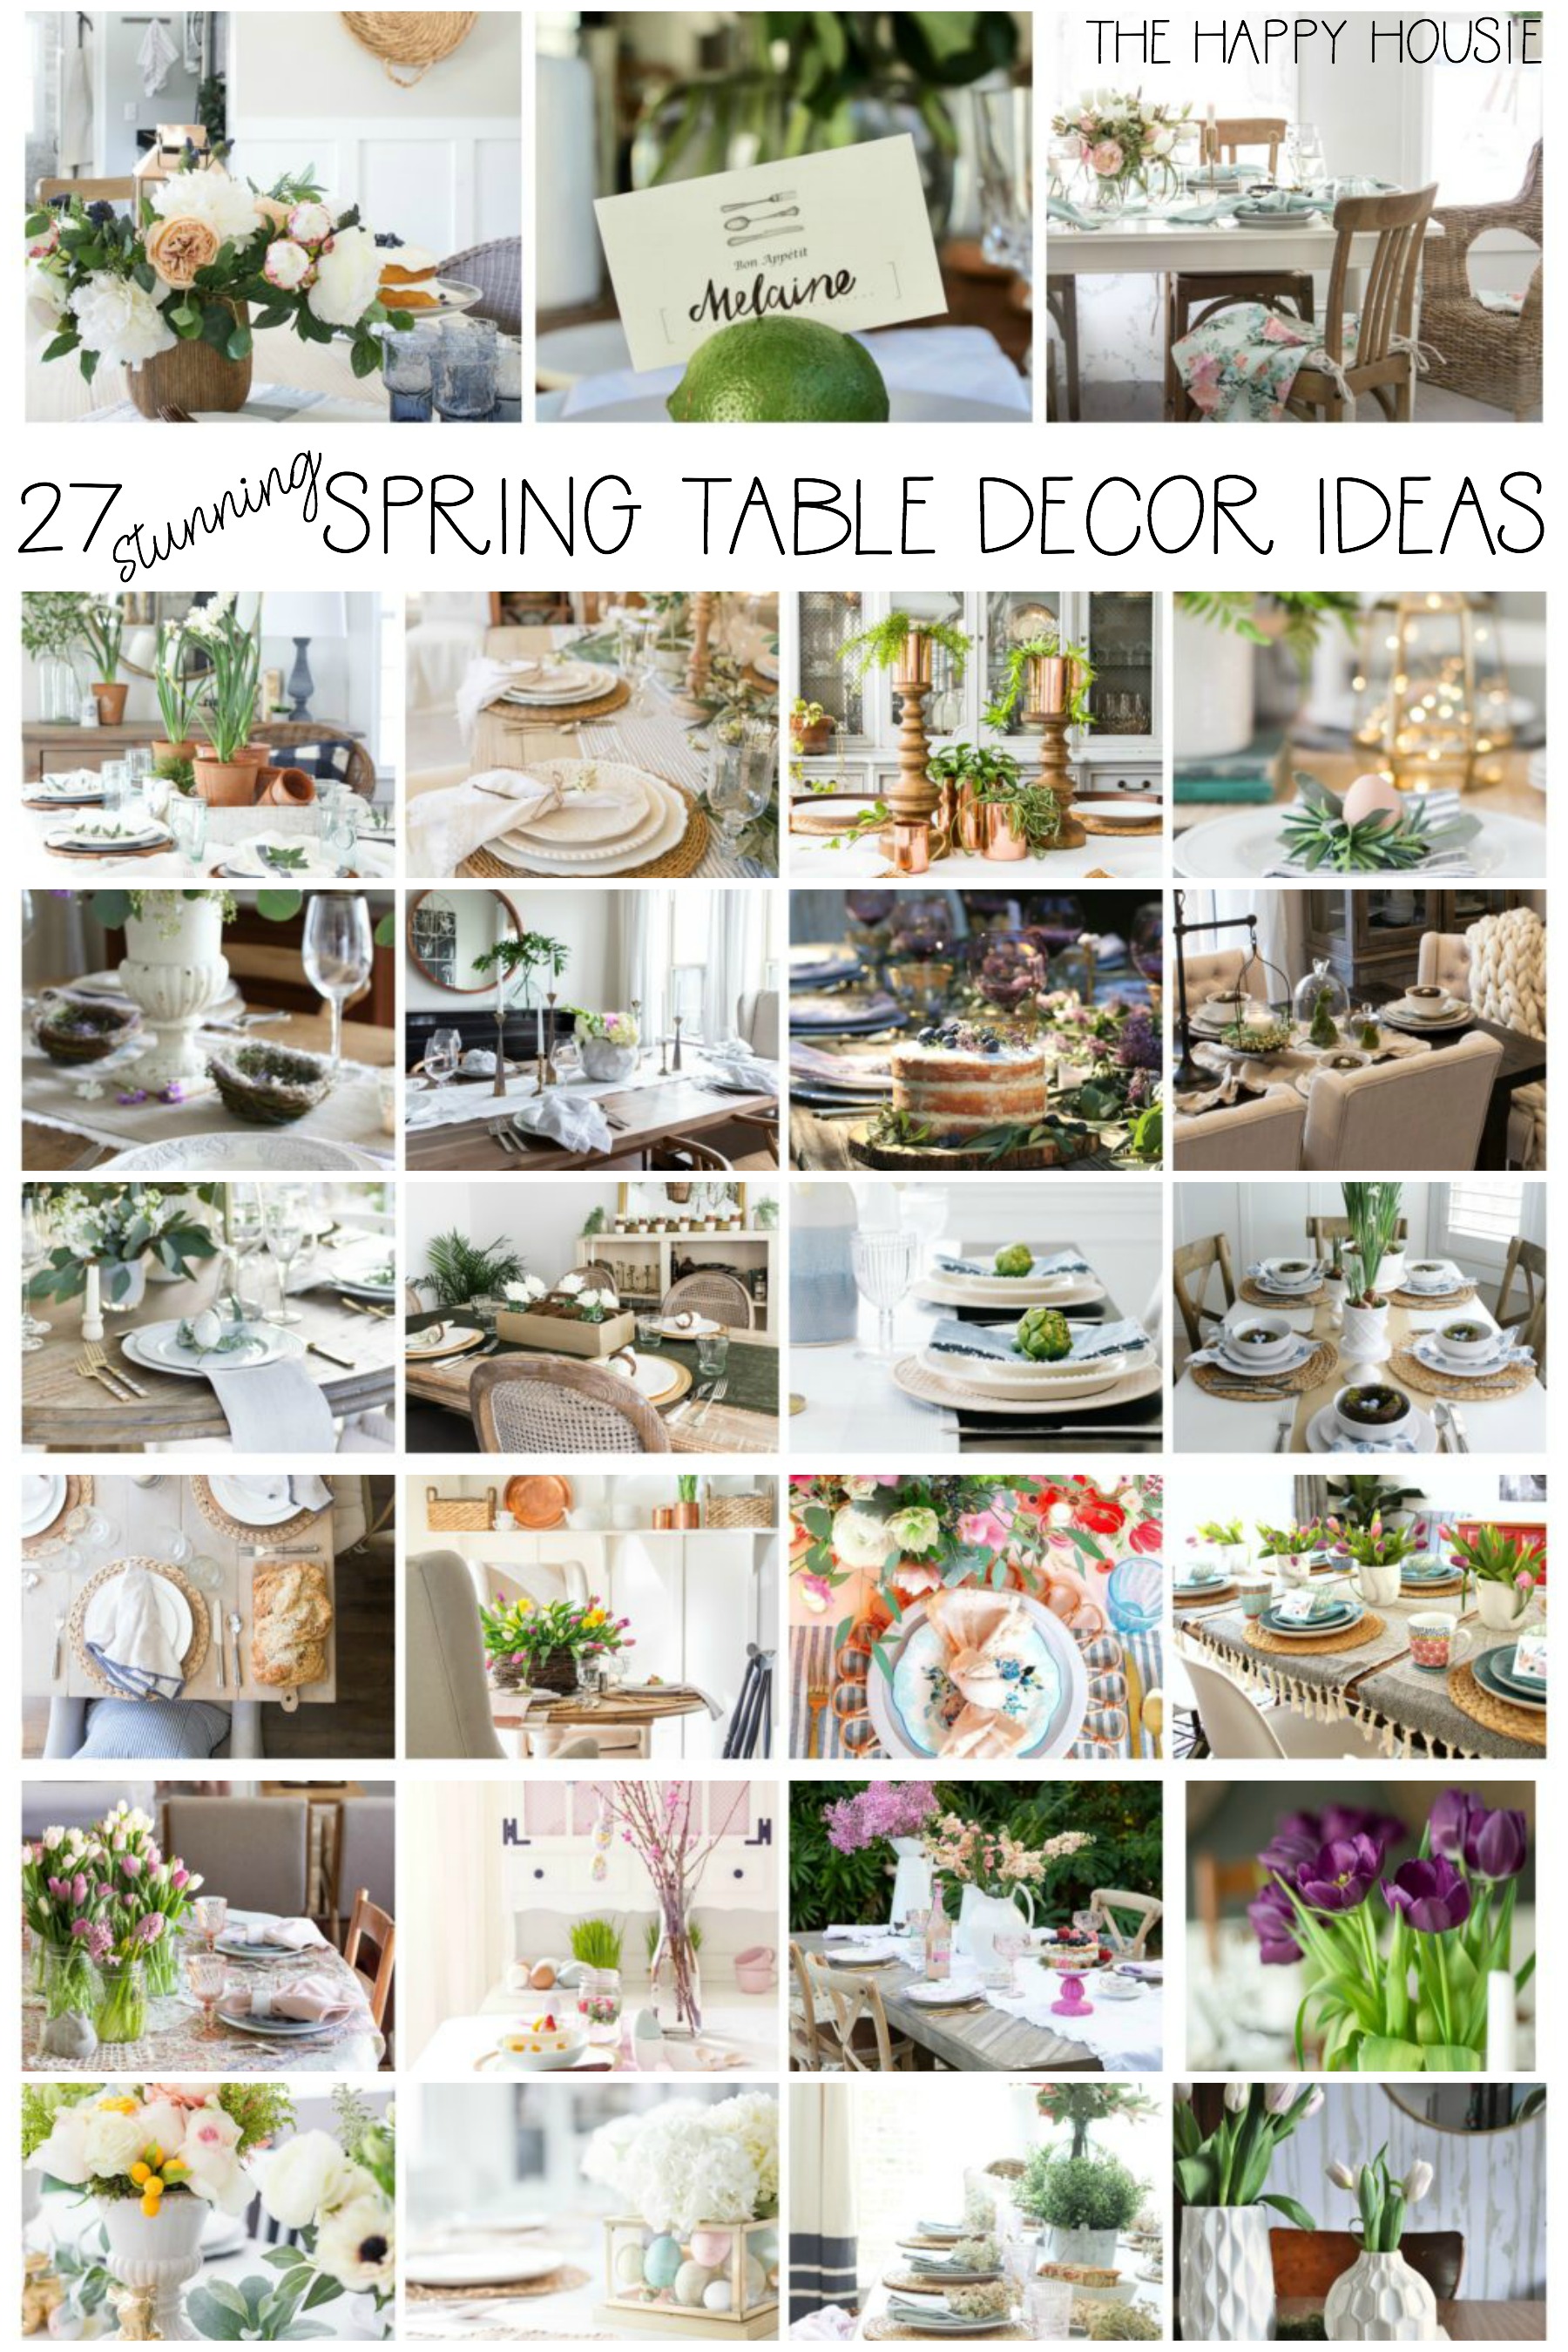 27 Stunning Table Decor Ideas graphic.